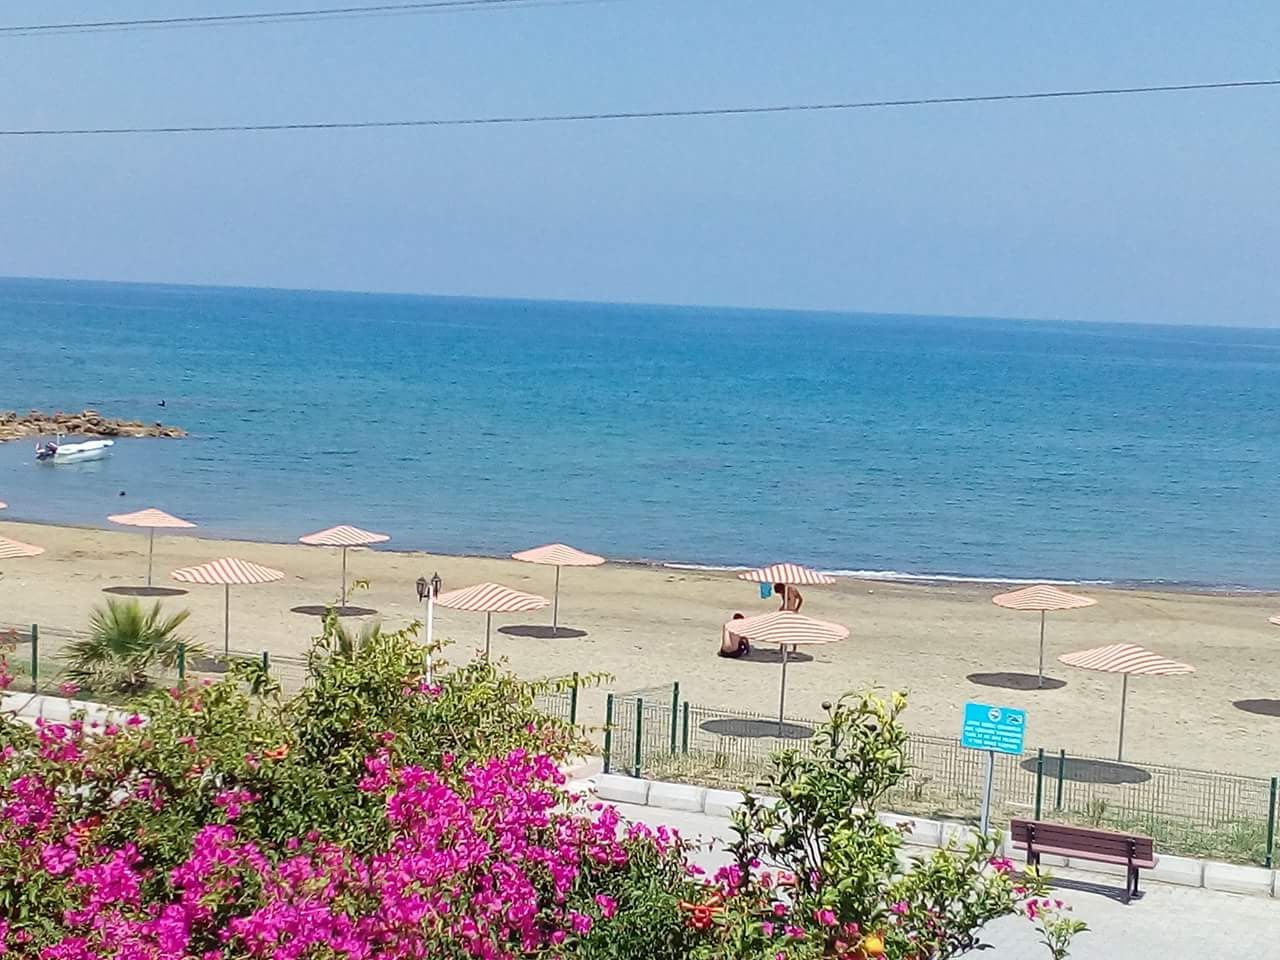 Foto af Denizkizi beach strandferiestedet område